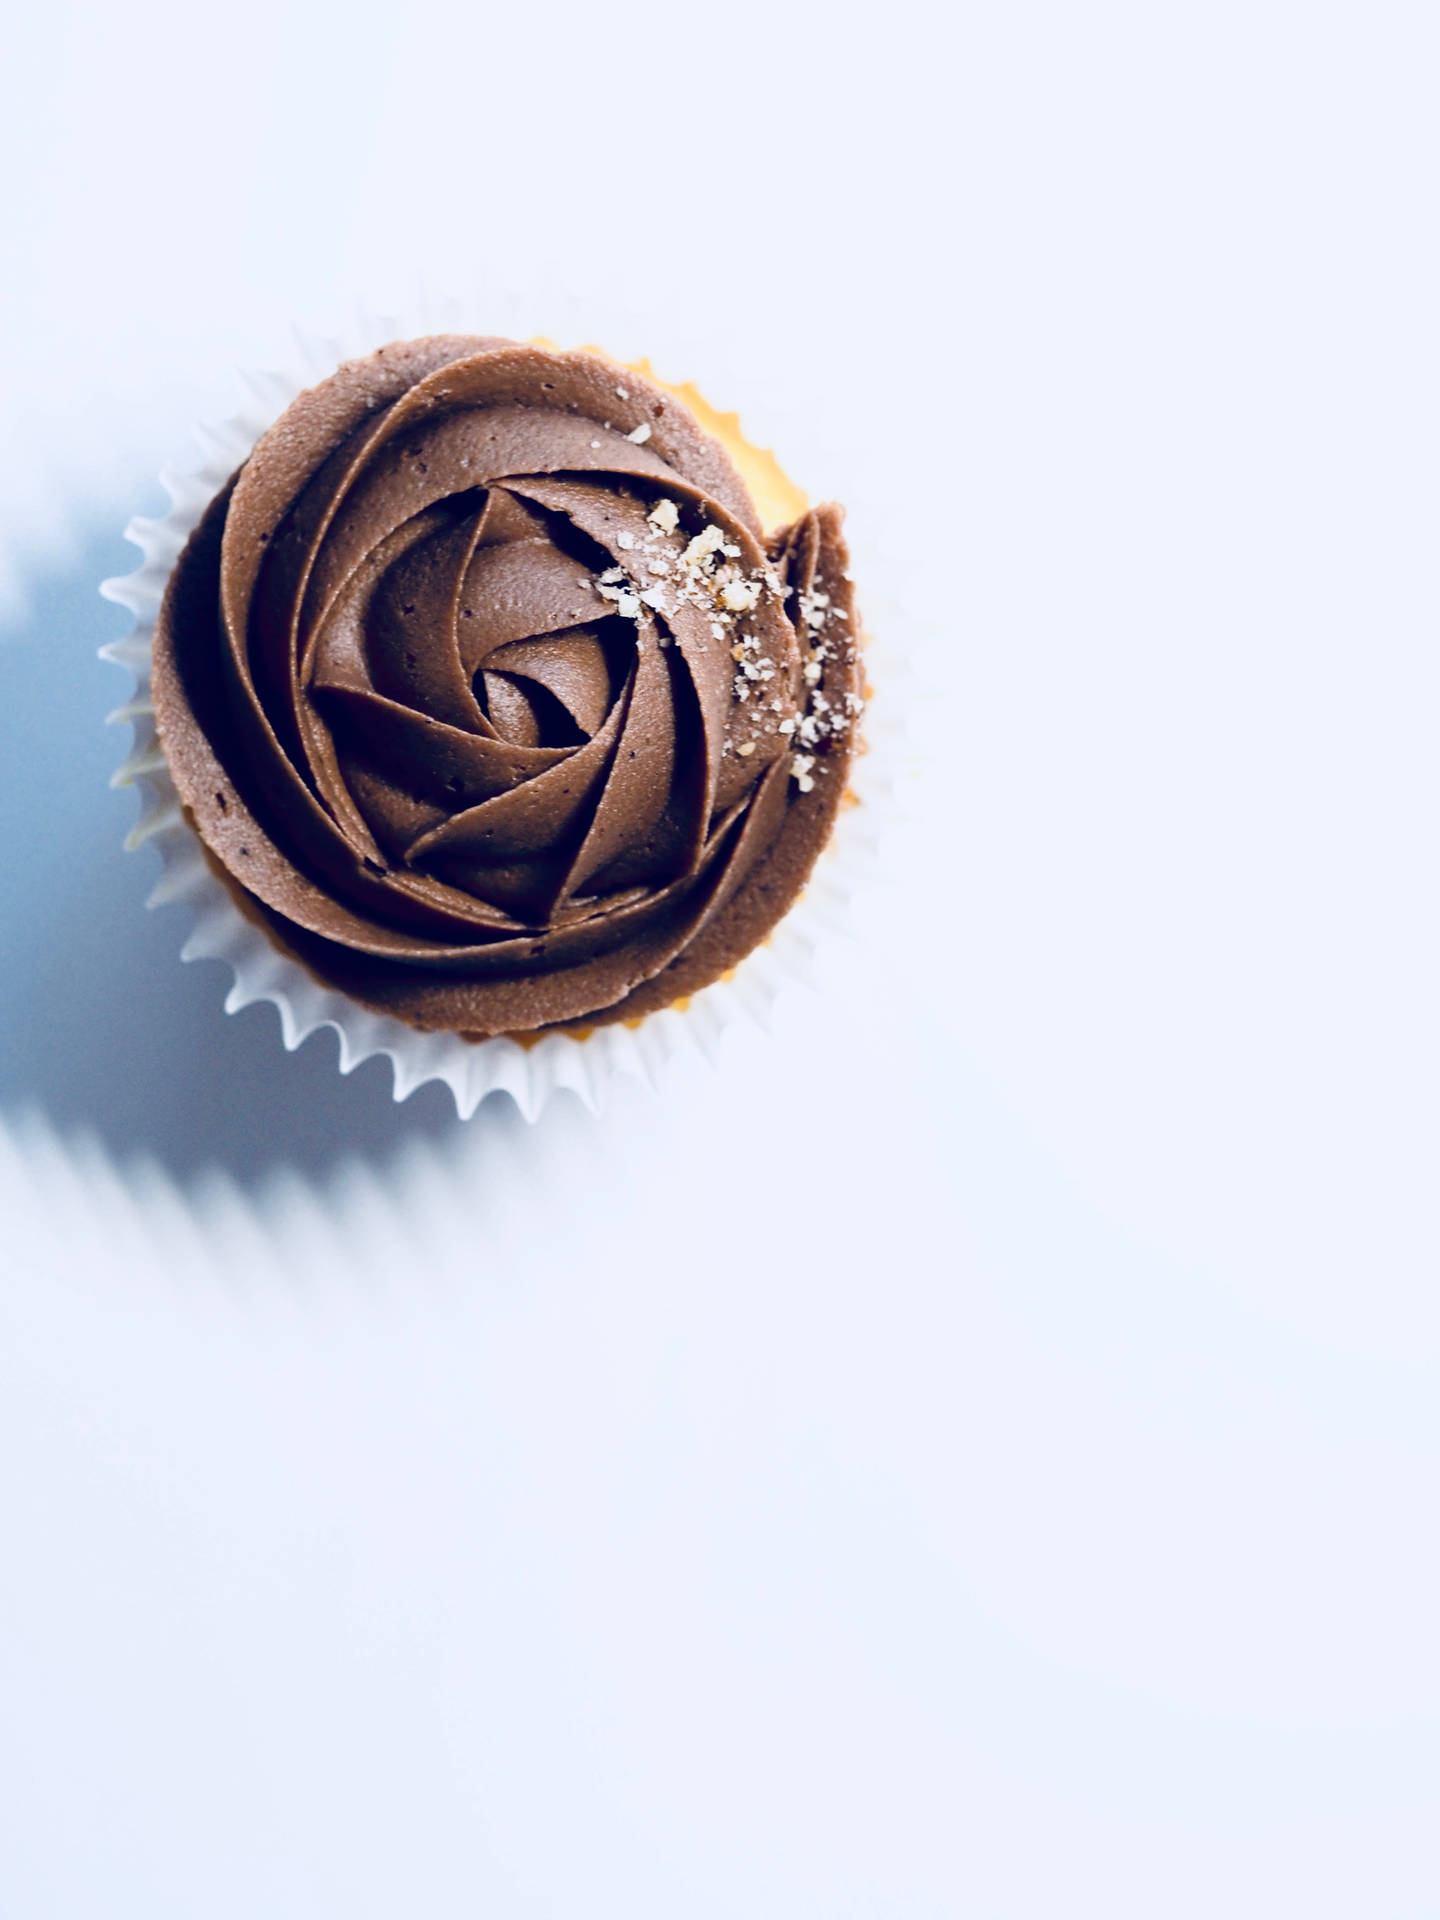 Chocolate Swirl Cupcake Background